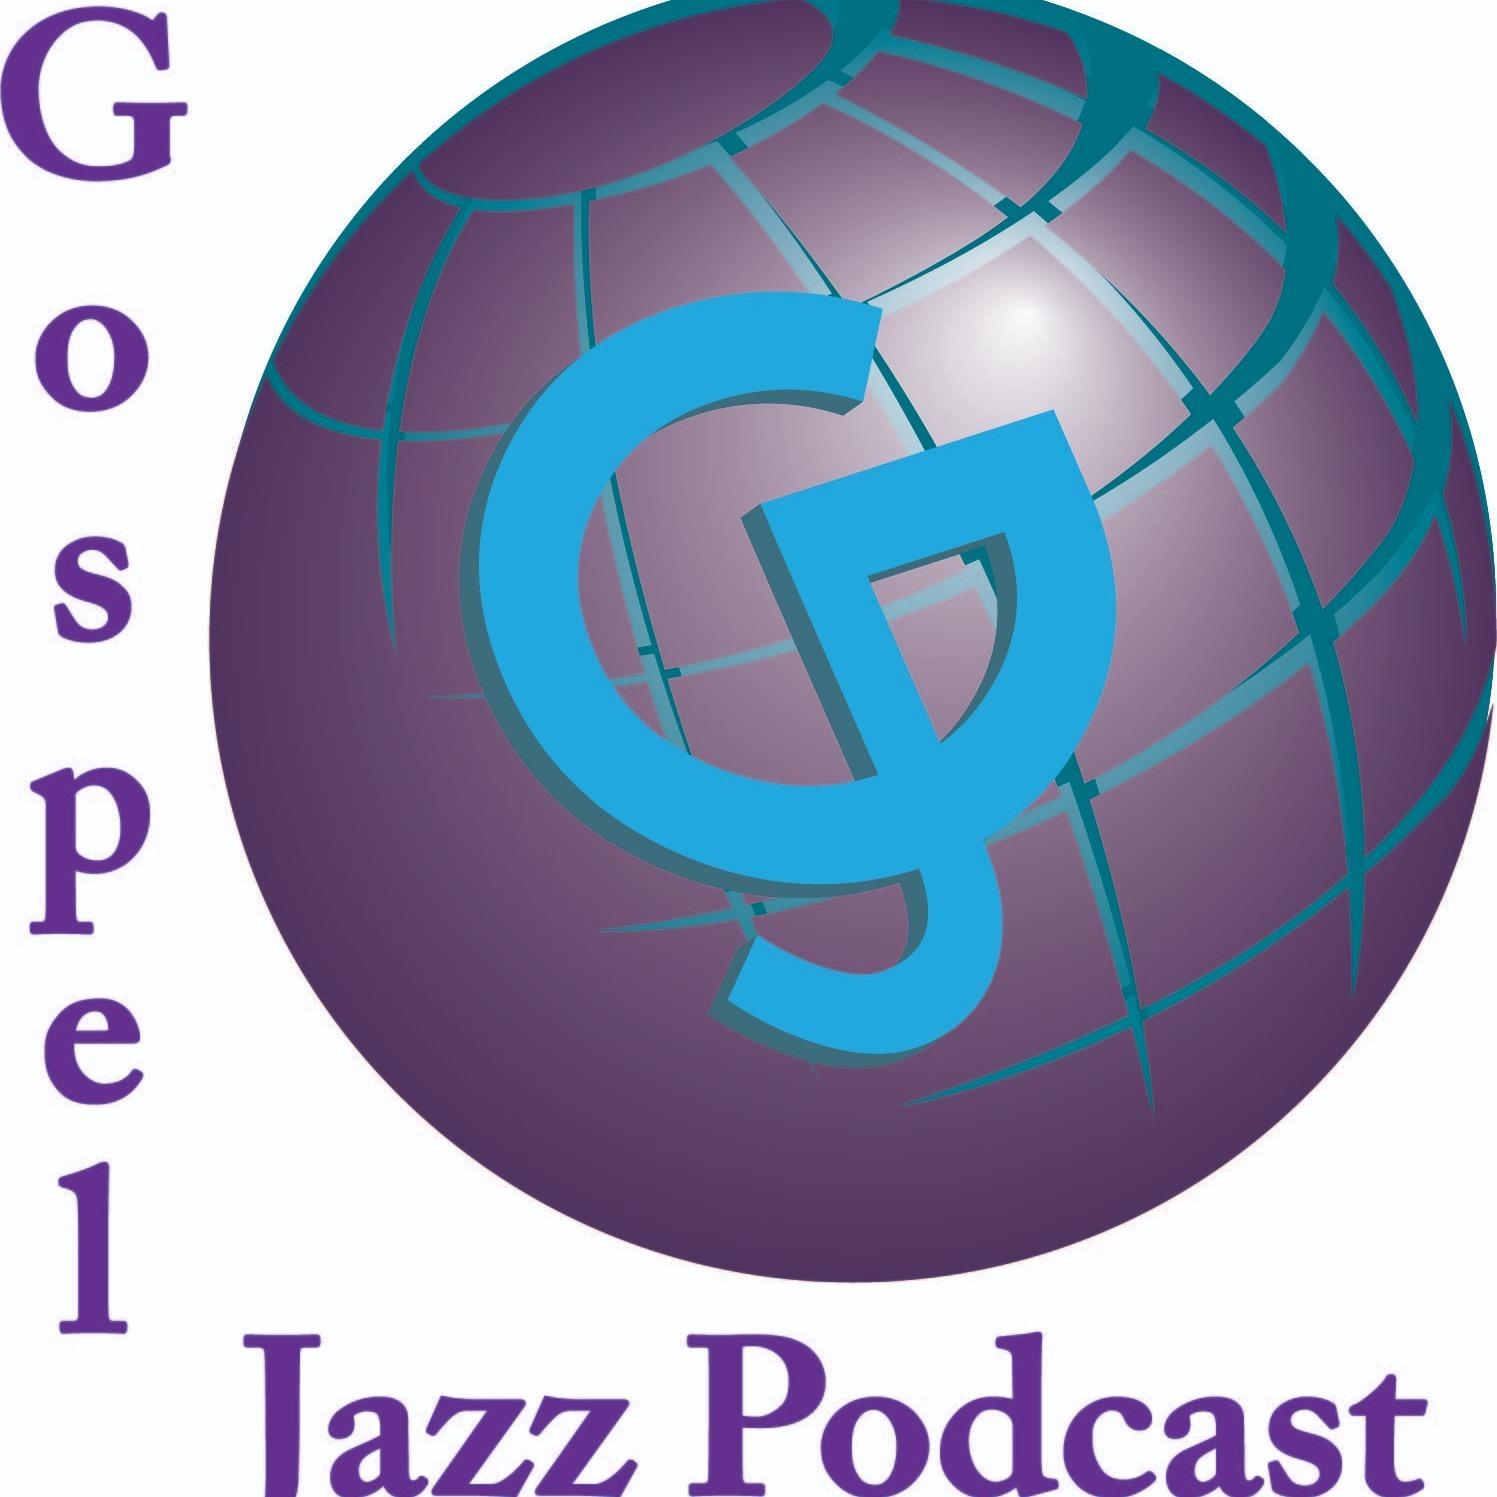 Gospel Jazz Podcast